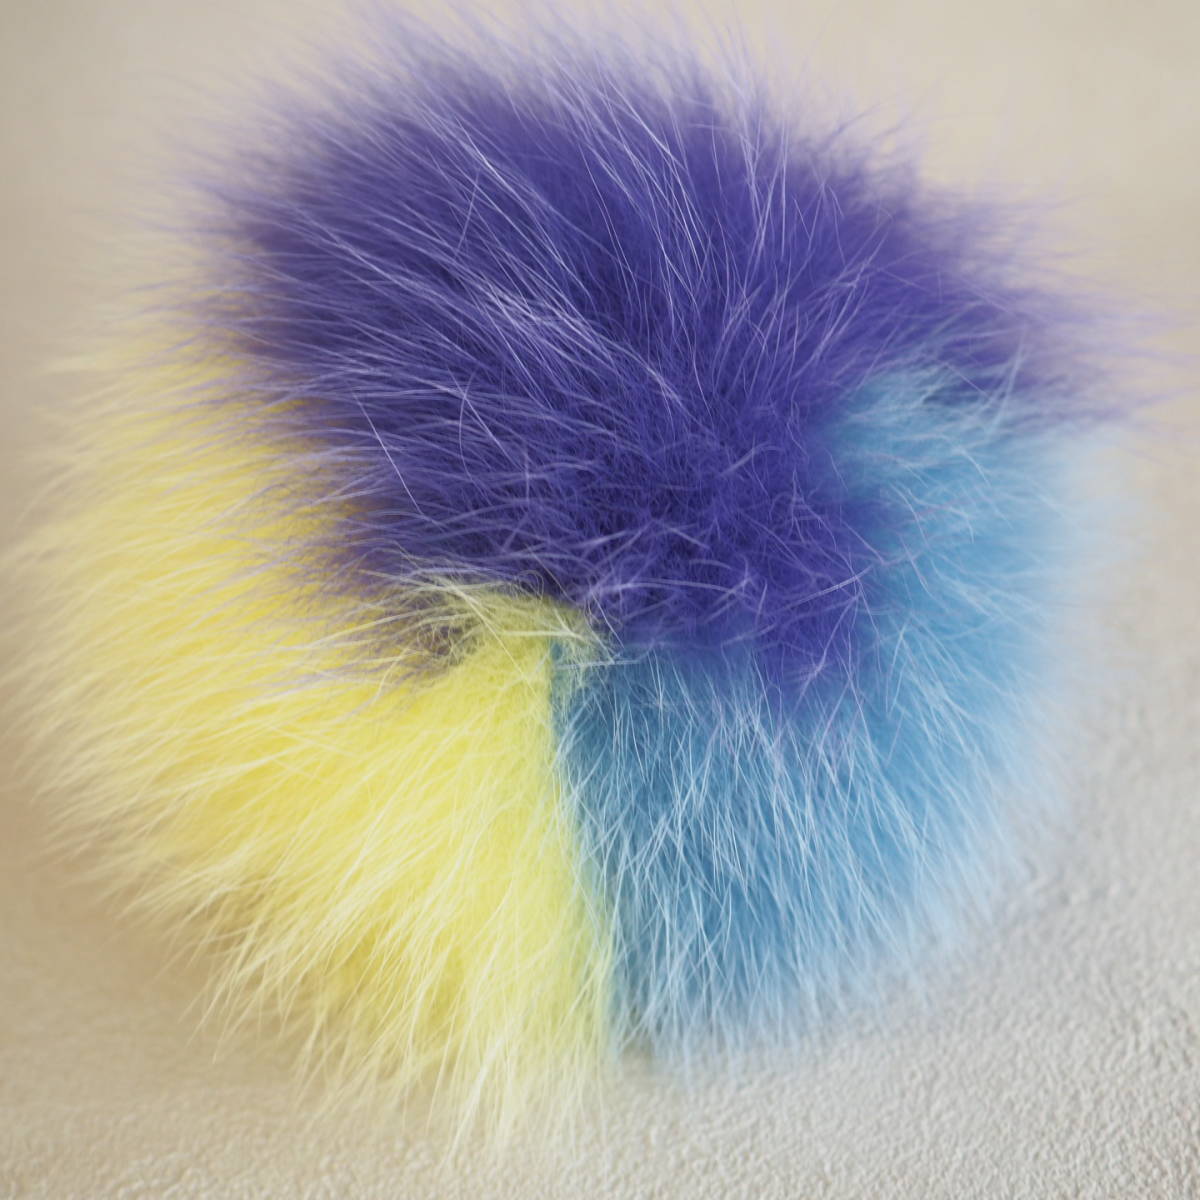  Fendi FENDIpompon charm key holder tricolor yellow blue purple fox fur real fur 7AR259 41C bonbon Monstar 